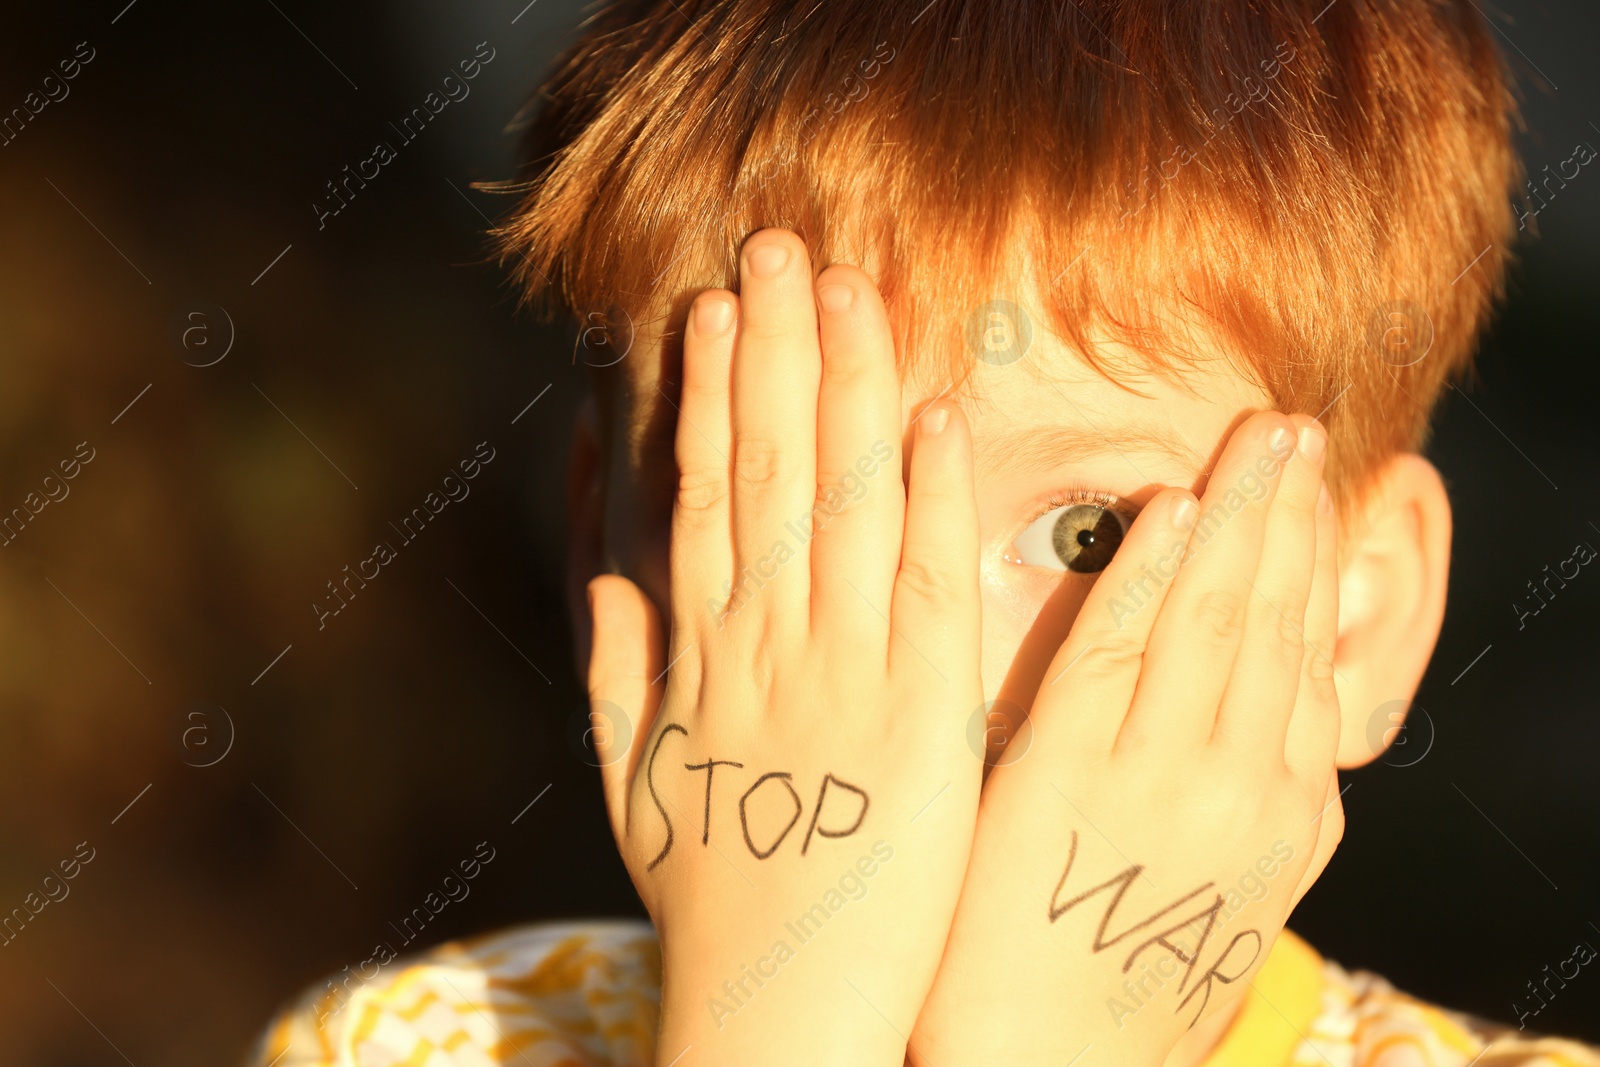 Photo of Little boy hiding face and words Stop War written on his hands outdoors, closeup